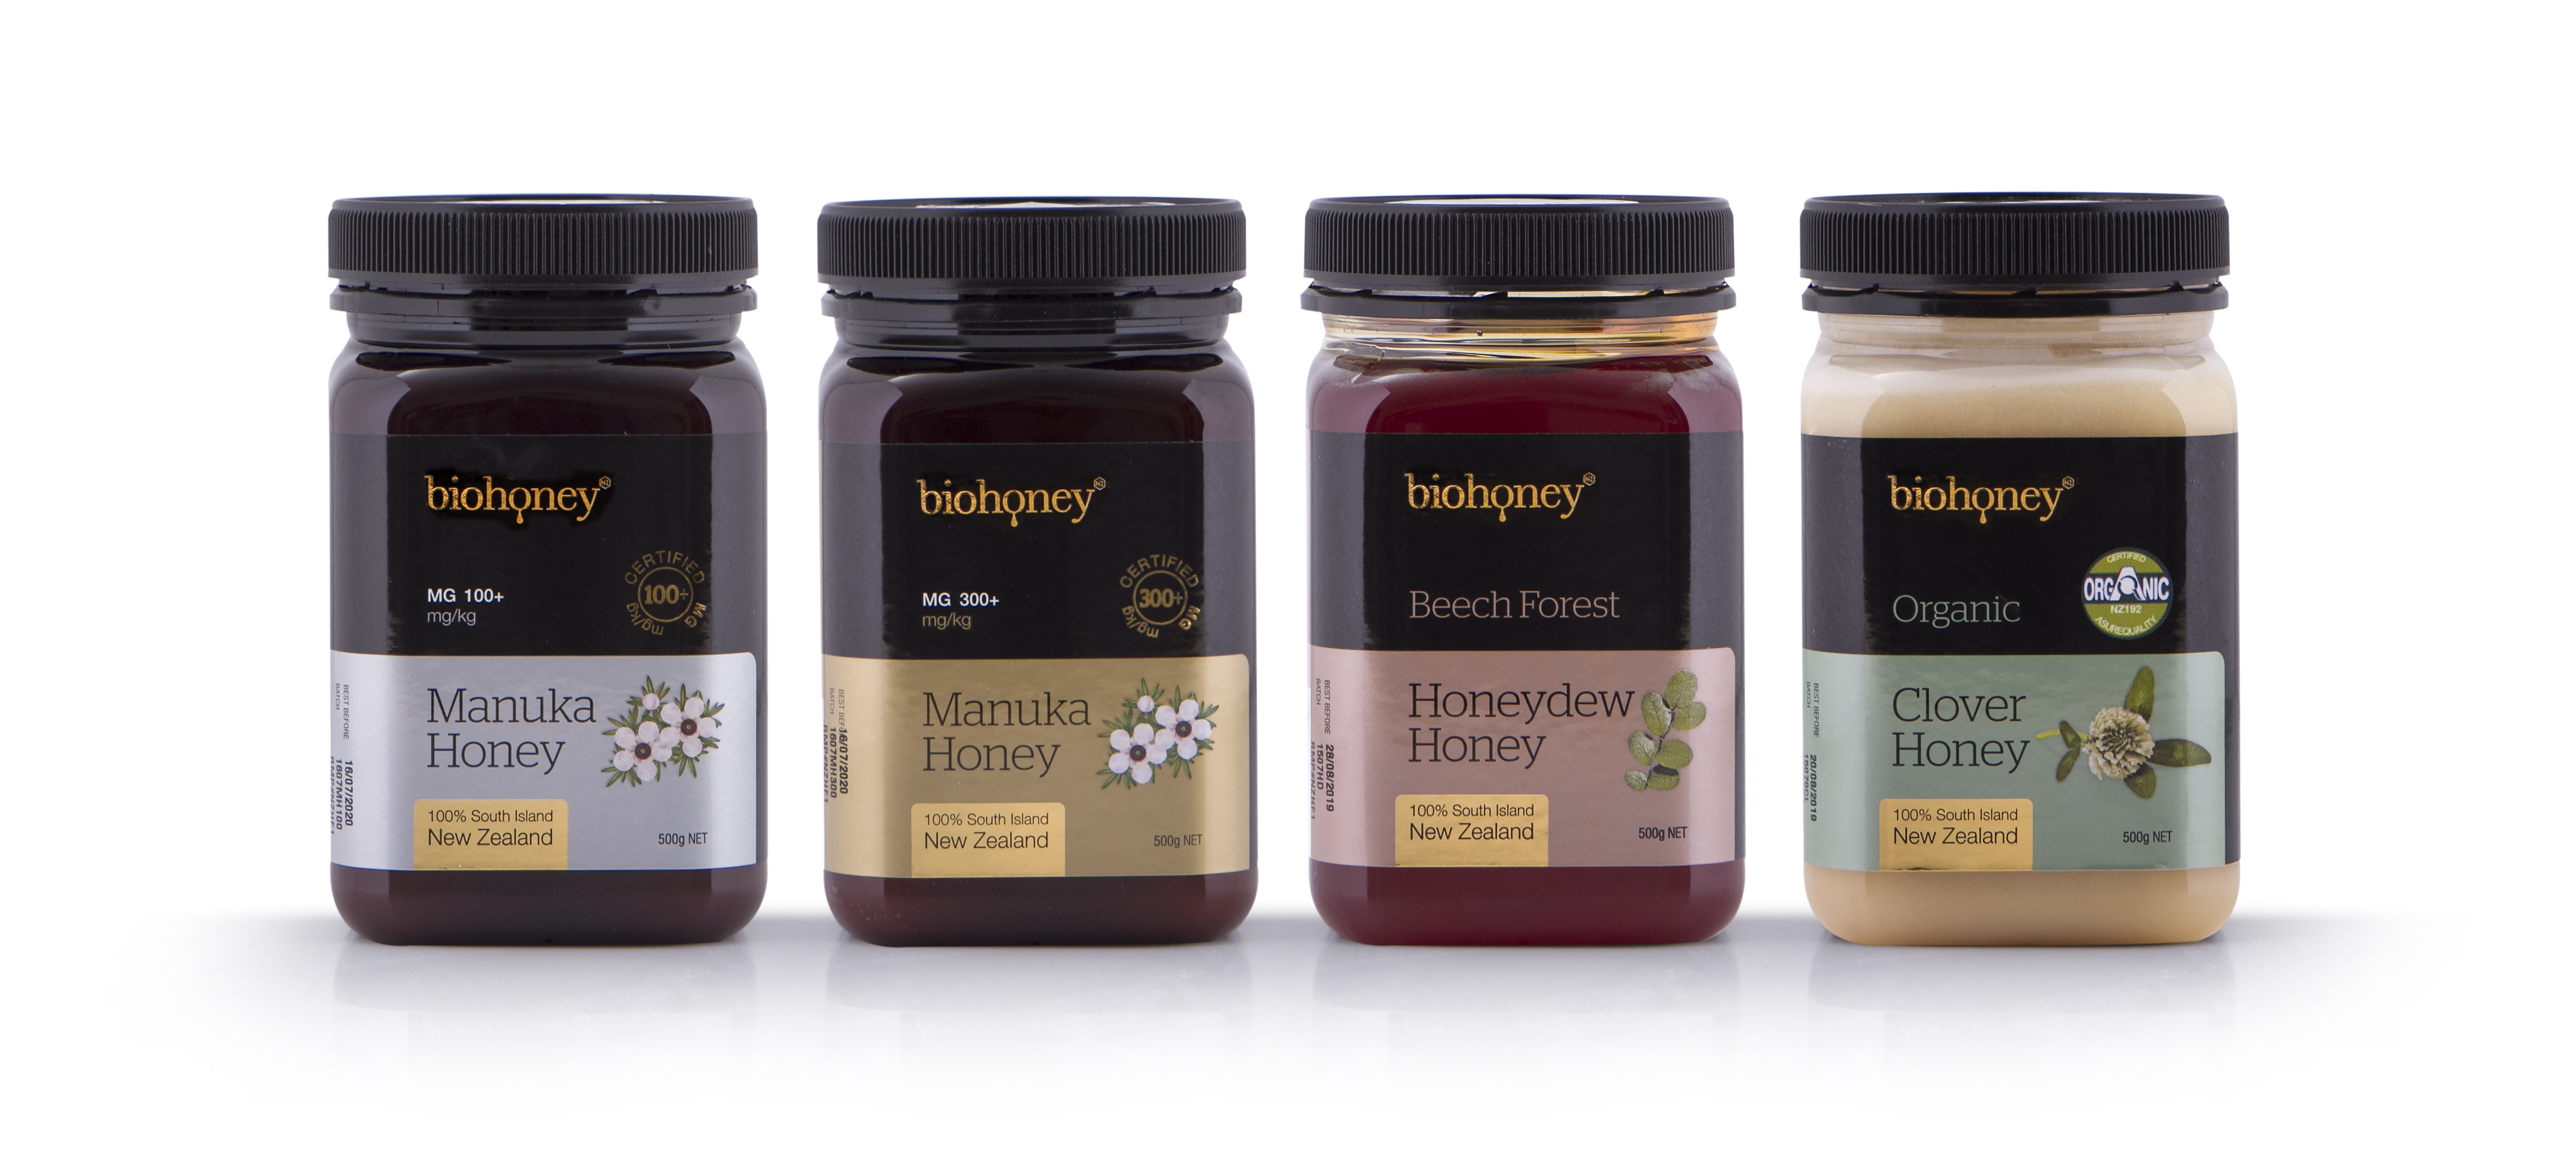 biohoney Group honey products